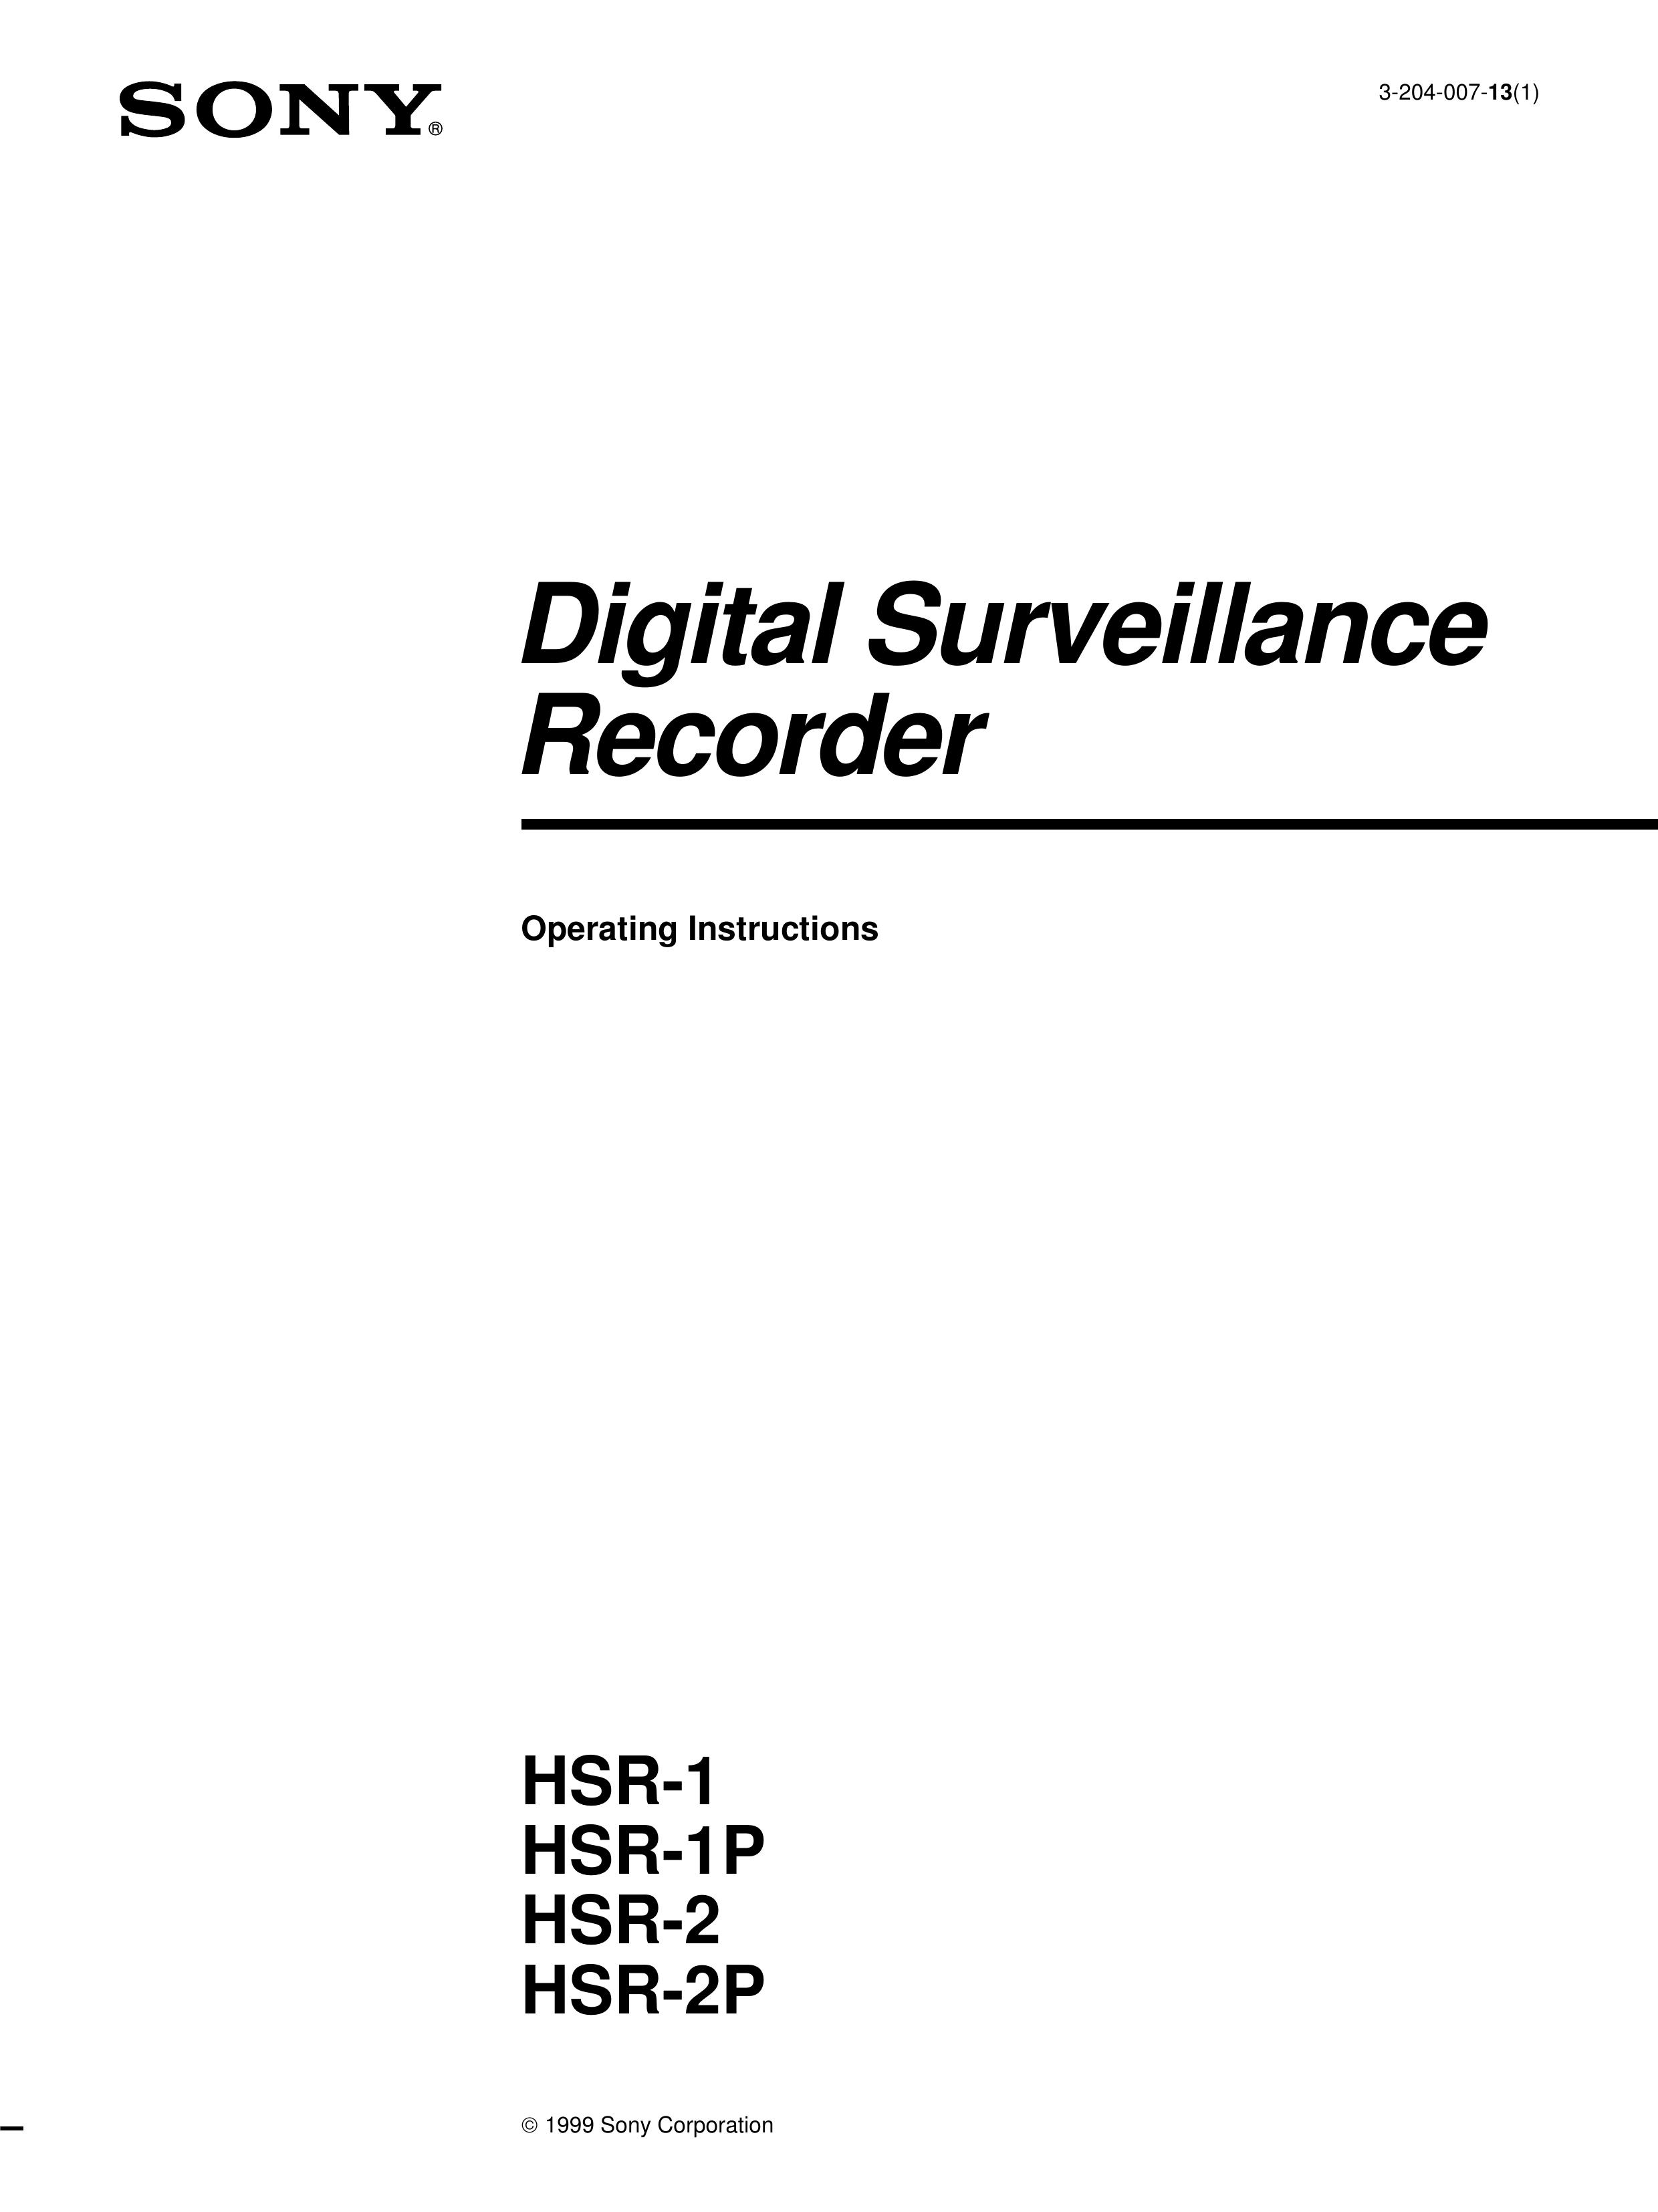 Sony HSR-1 Security Camera User Manual